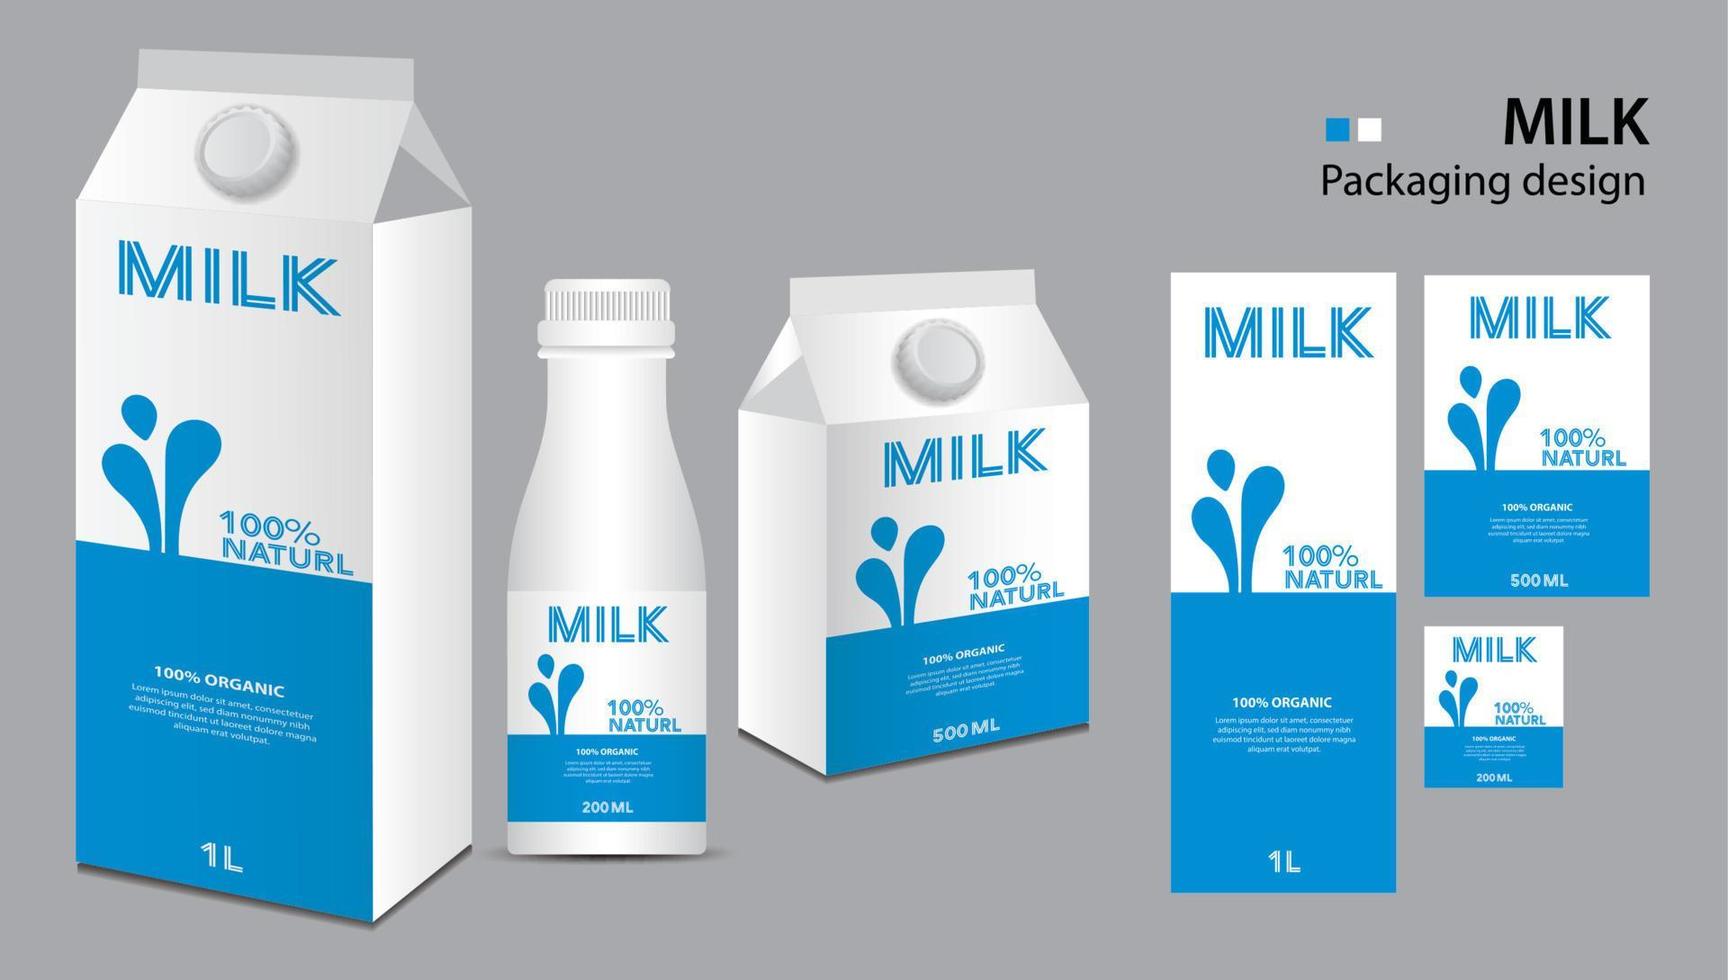 Milk package design, milk label design, Milk boxes set and bottle vector, box reAalistic 3d illustration, creative packaging template, product design, food banner, drop graphic elements vector